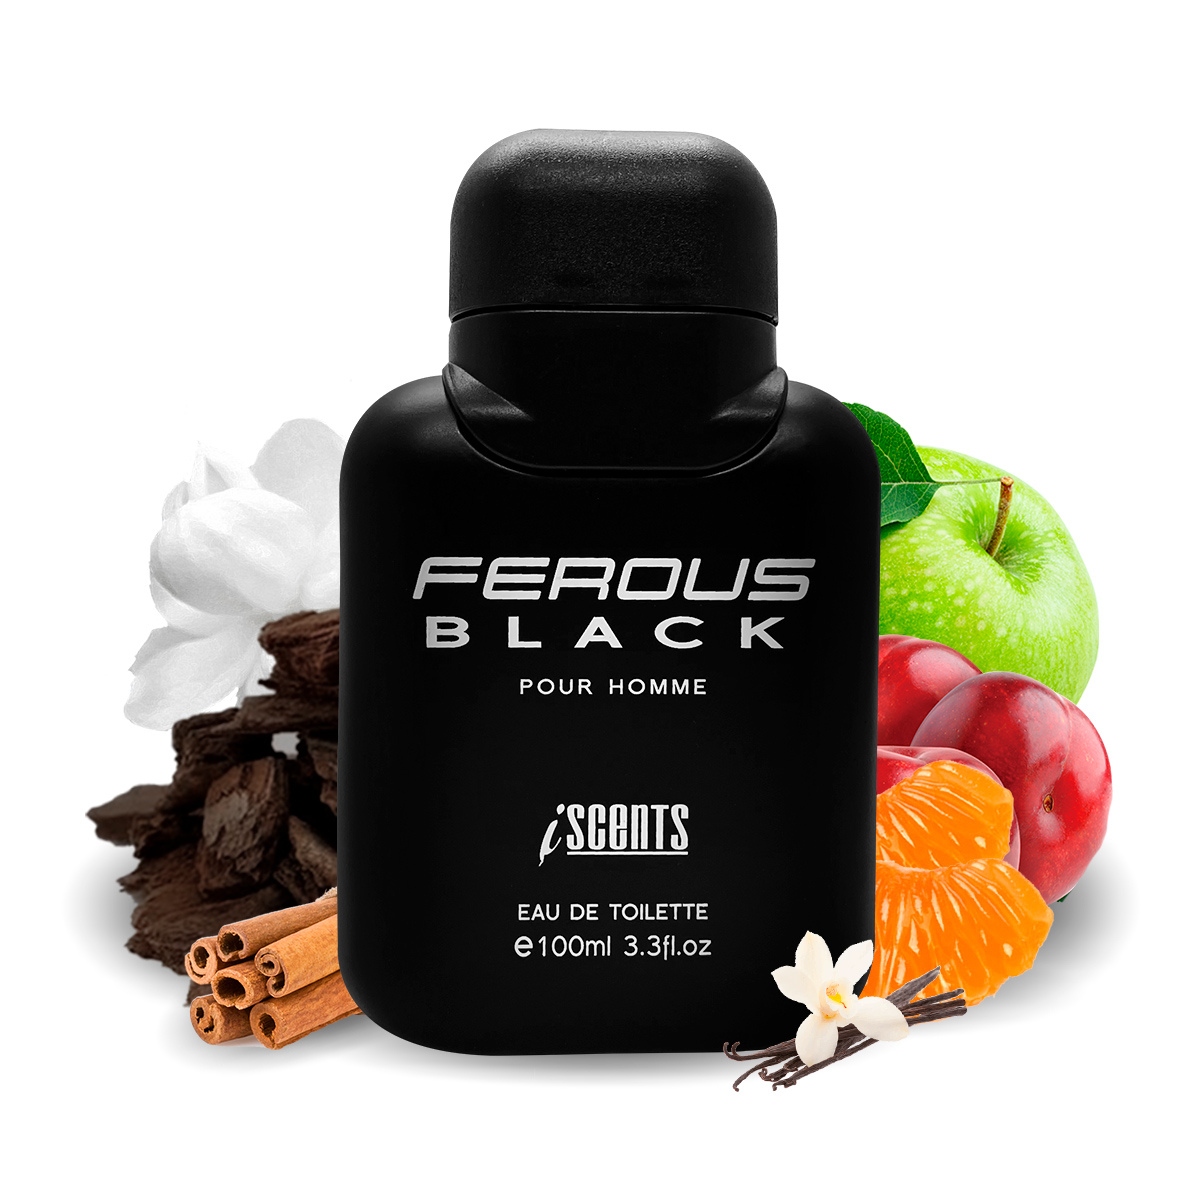 Perfume Ferous Black masculino edt 100 ml I Scents - Mercari Perfumes